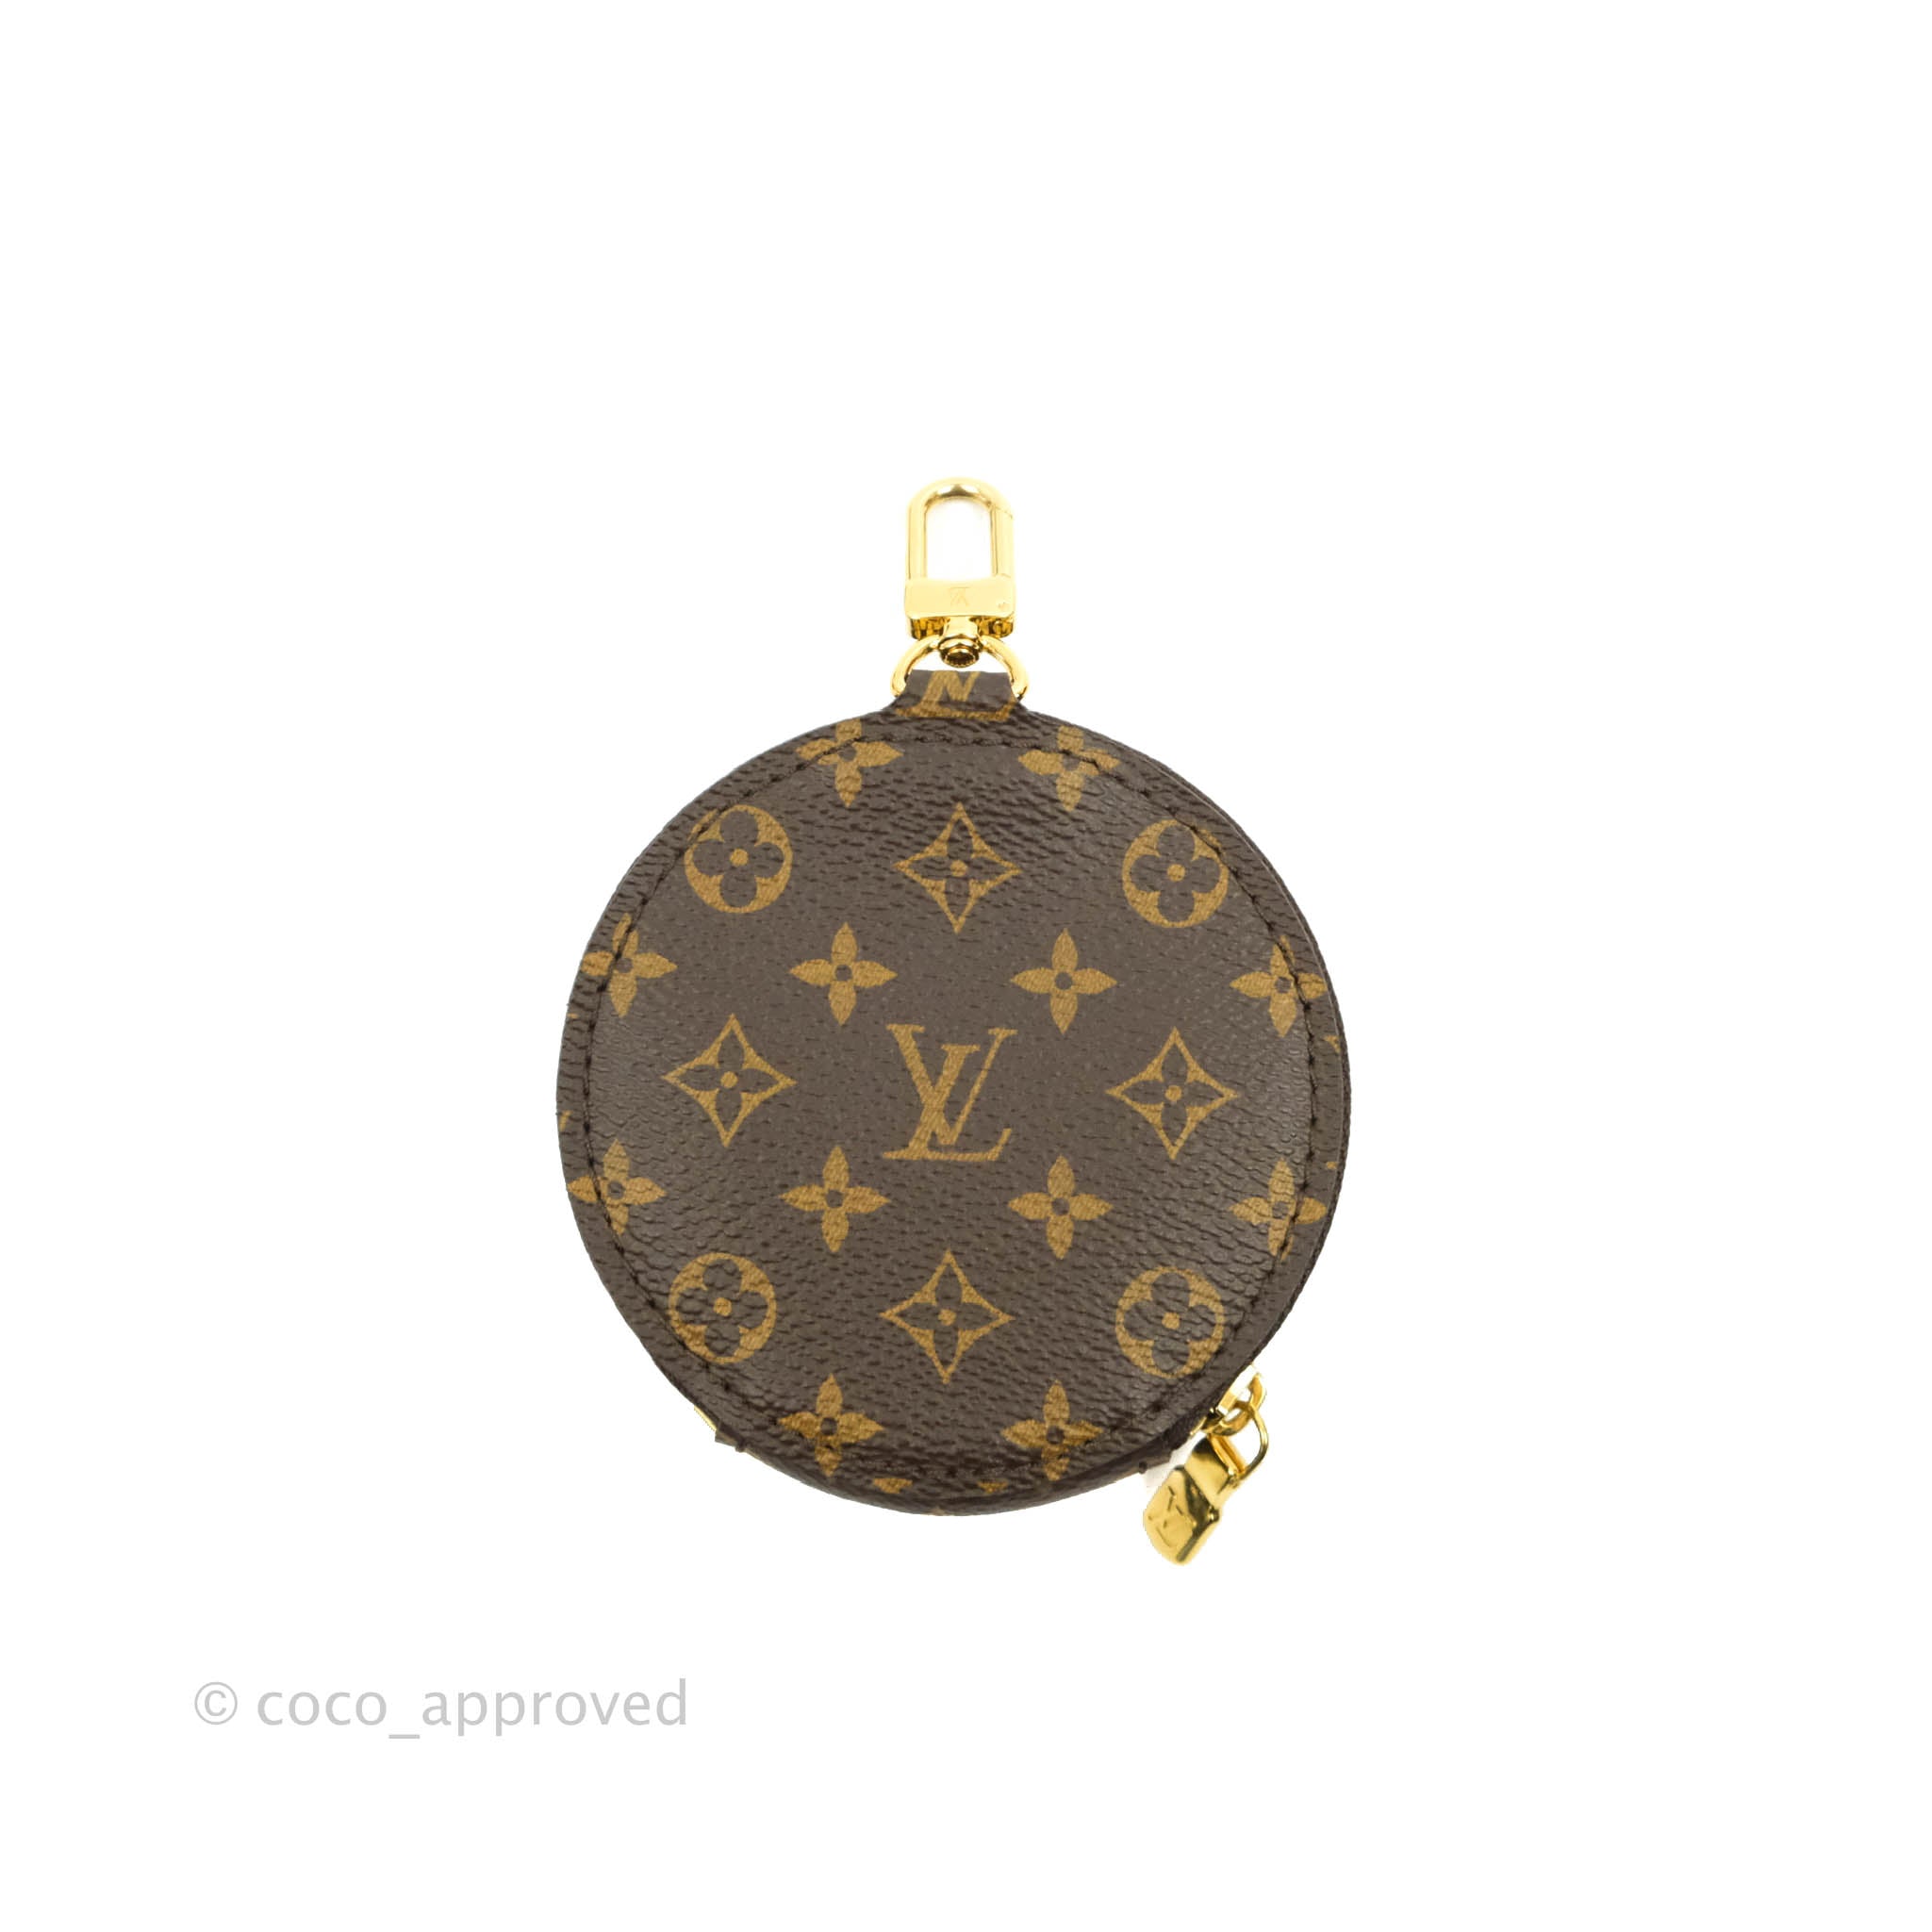 Like New) Louis Vuitton Black and Monogram Handbags Twilly Silk